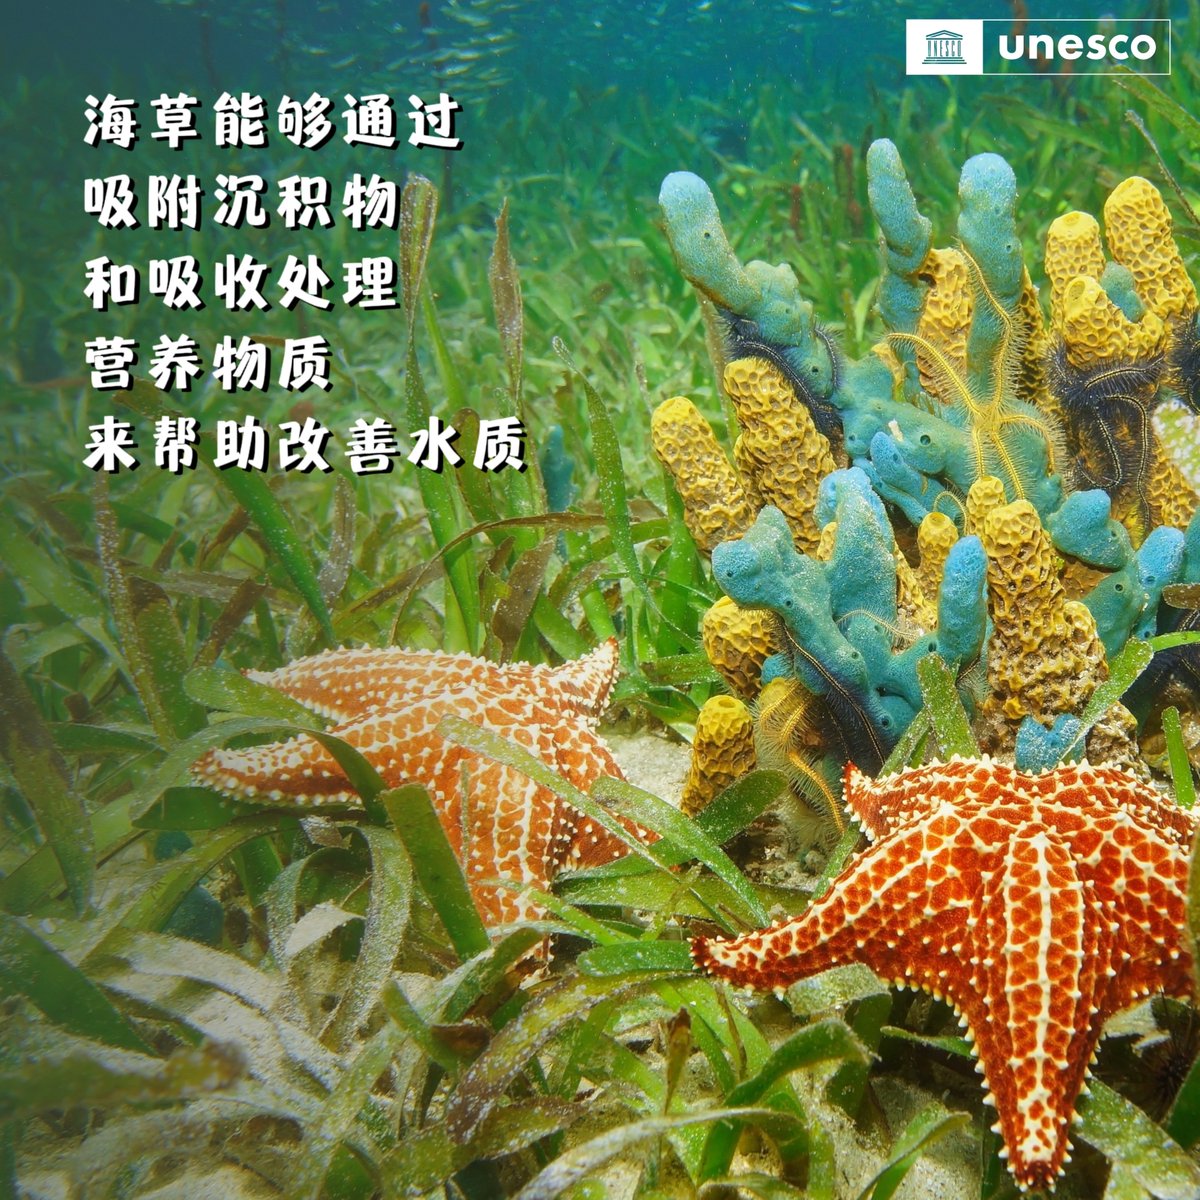 UNESCO_chinese tweet picture